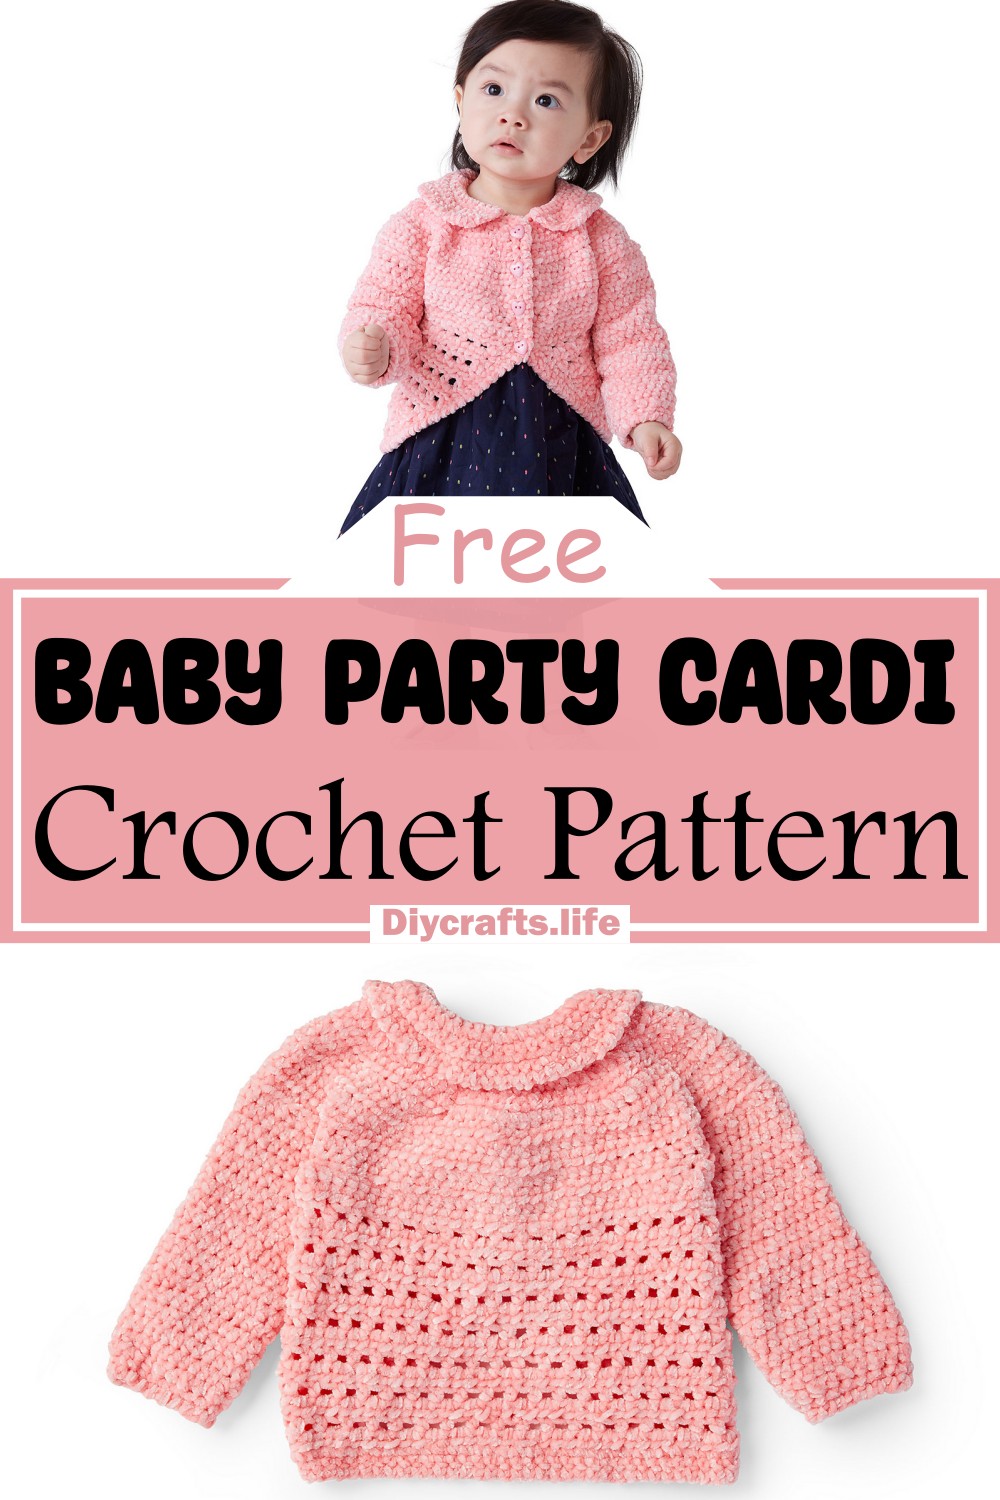 Crochet Baby Party Cardi Pattern